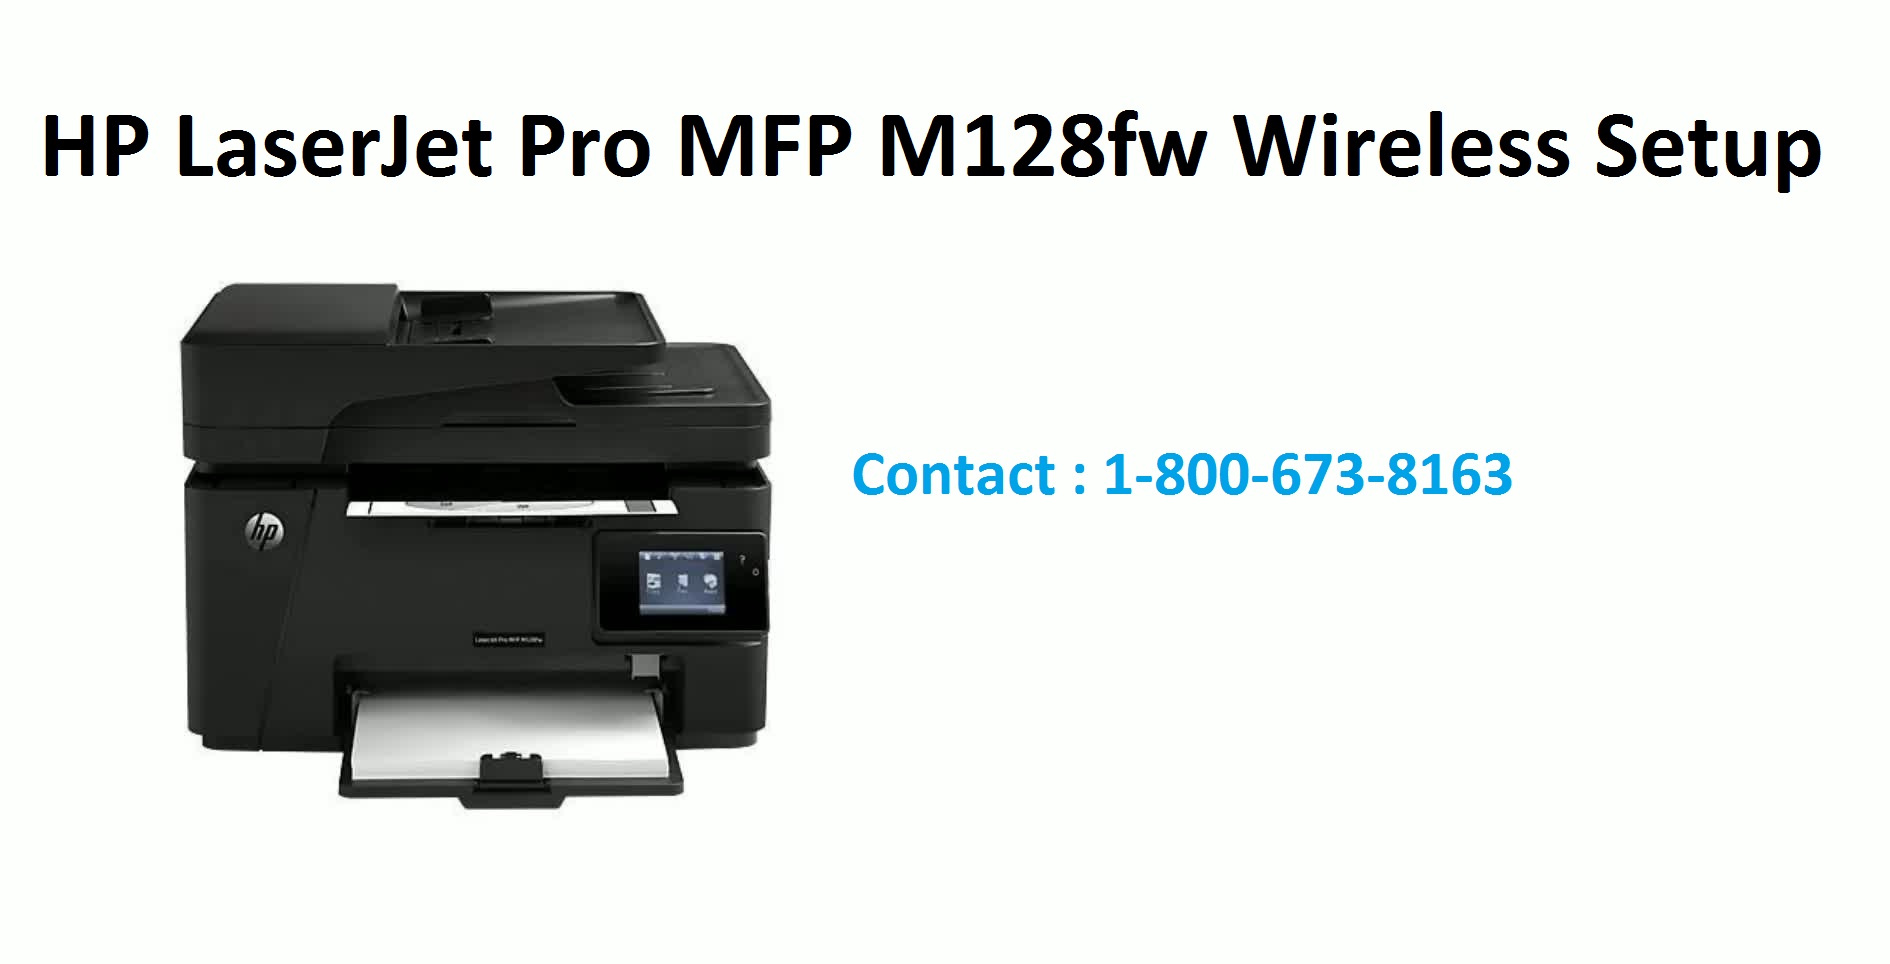 How To Do LaserJet Pro MFP M128fw Wireless Setup?